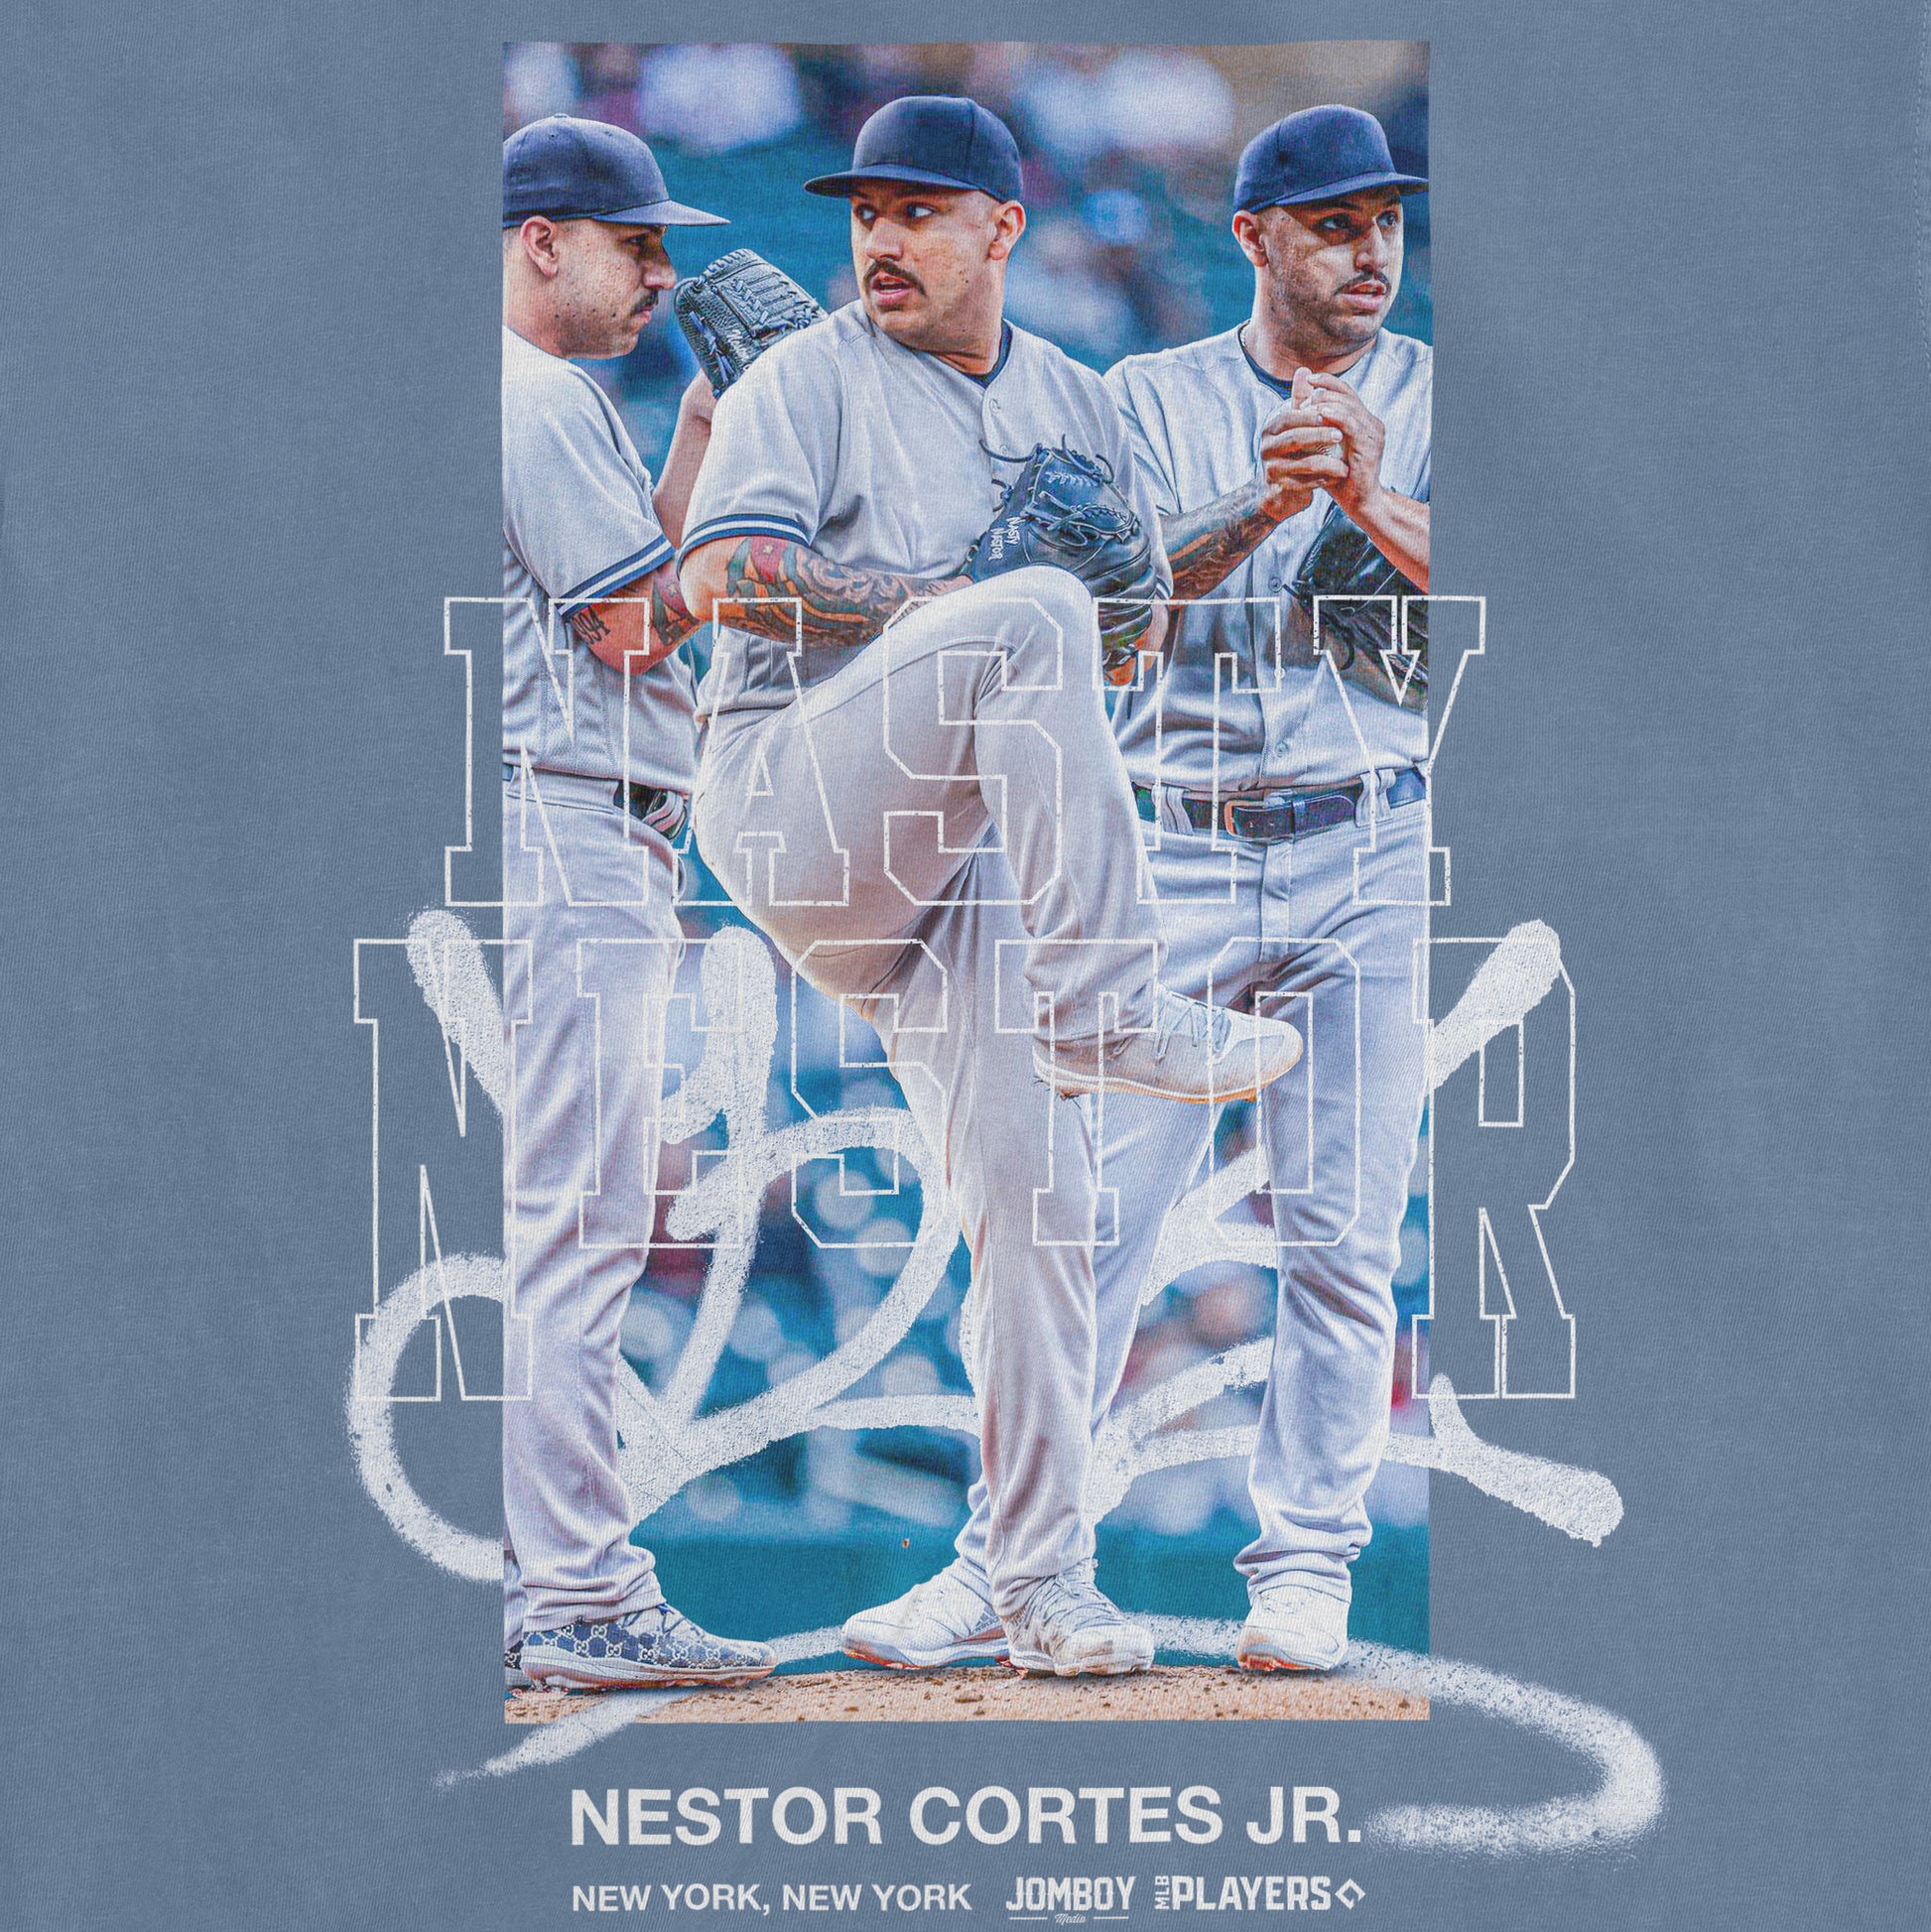 New York Yankees Nasty Nestor 2022 shirt, hoodie, sweater, long sleeve and  tank top